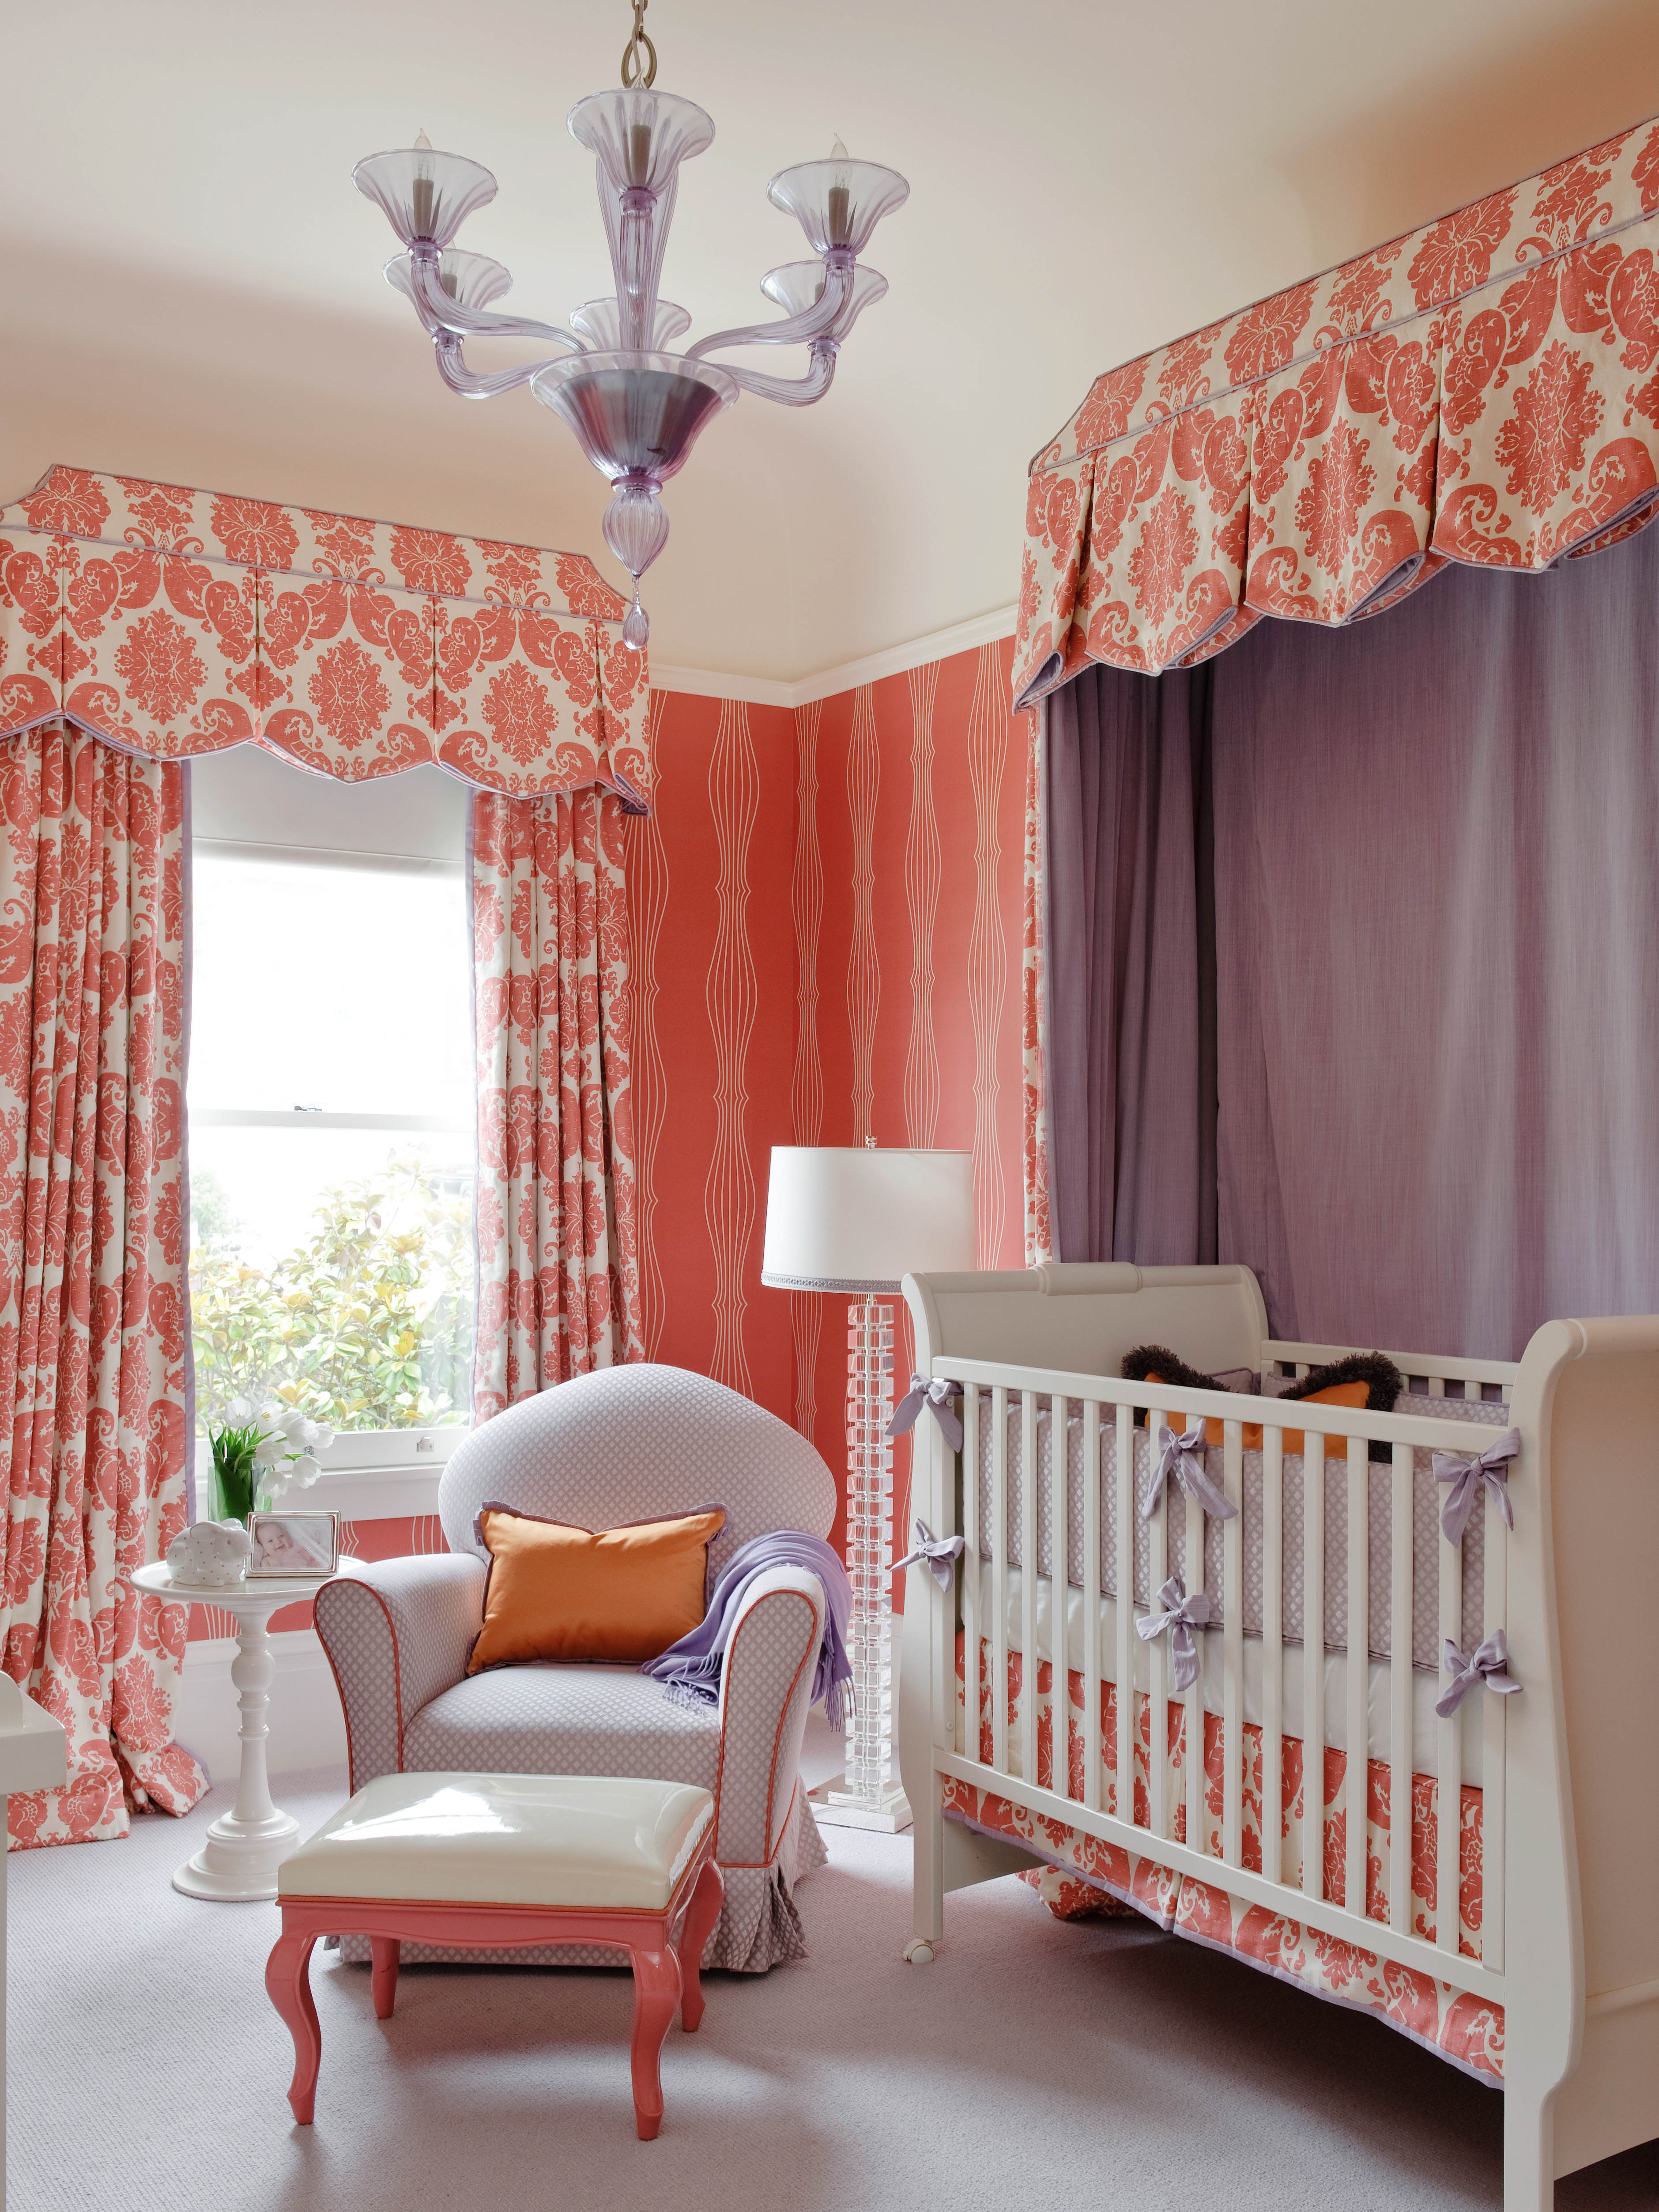 Regal Window Valance Curtain Nursery Bedroom Kids Navy Baby Boys Decor Gift New 